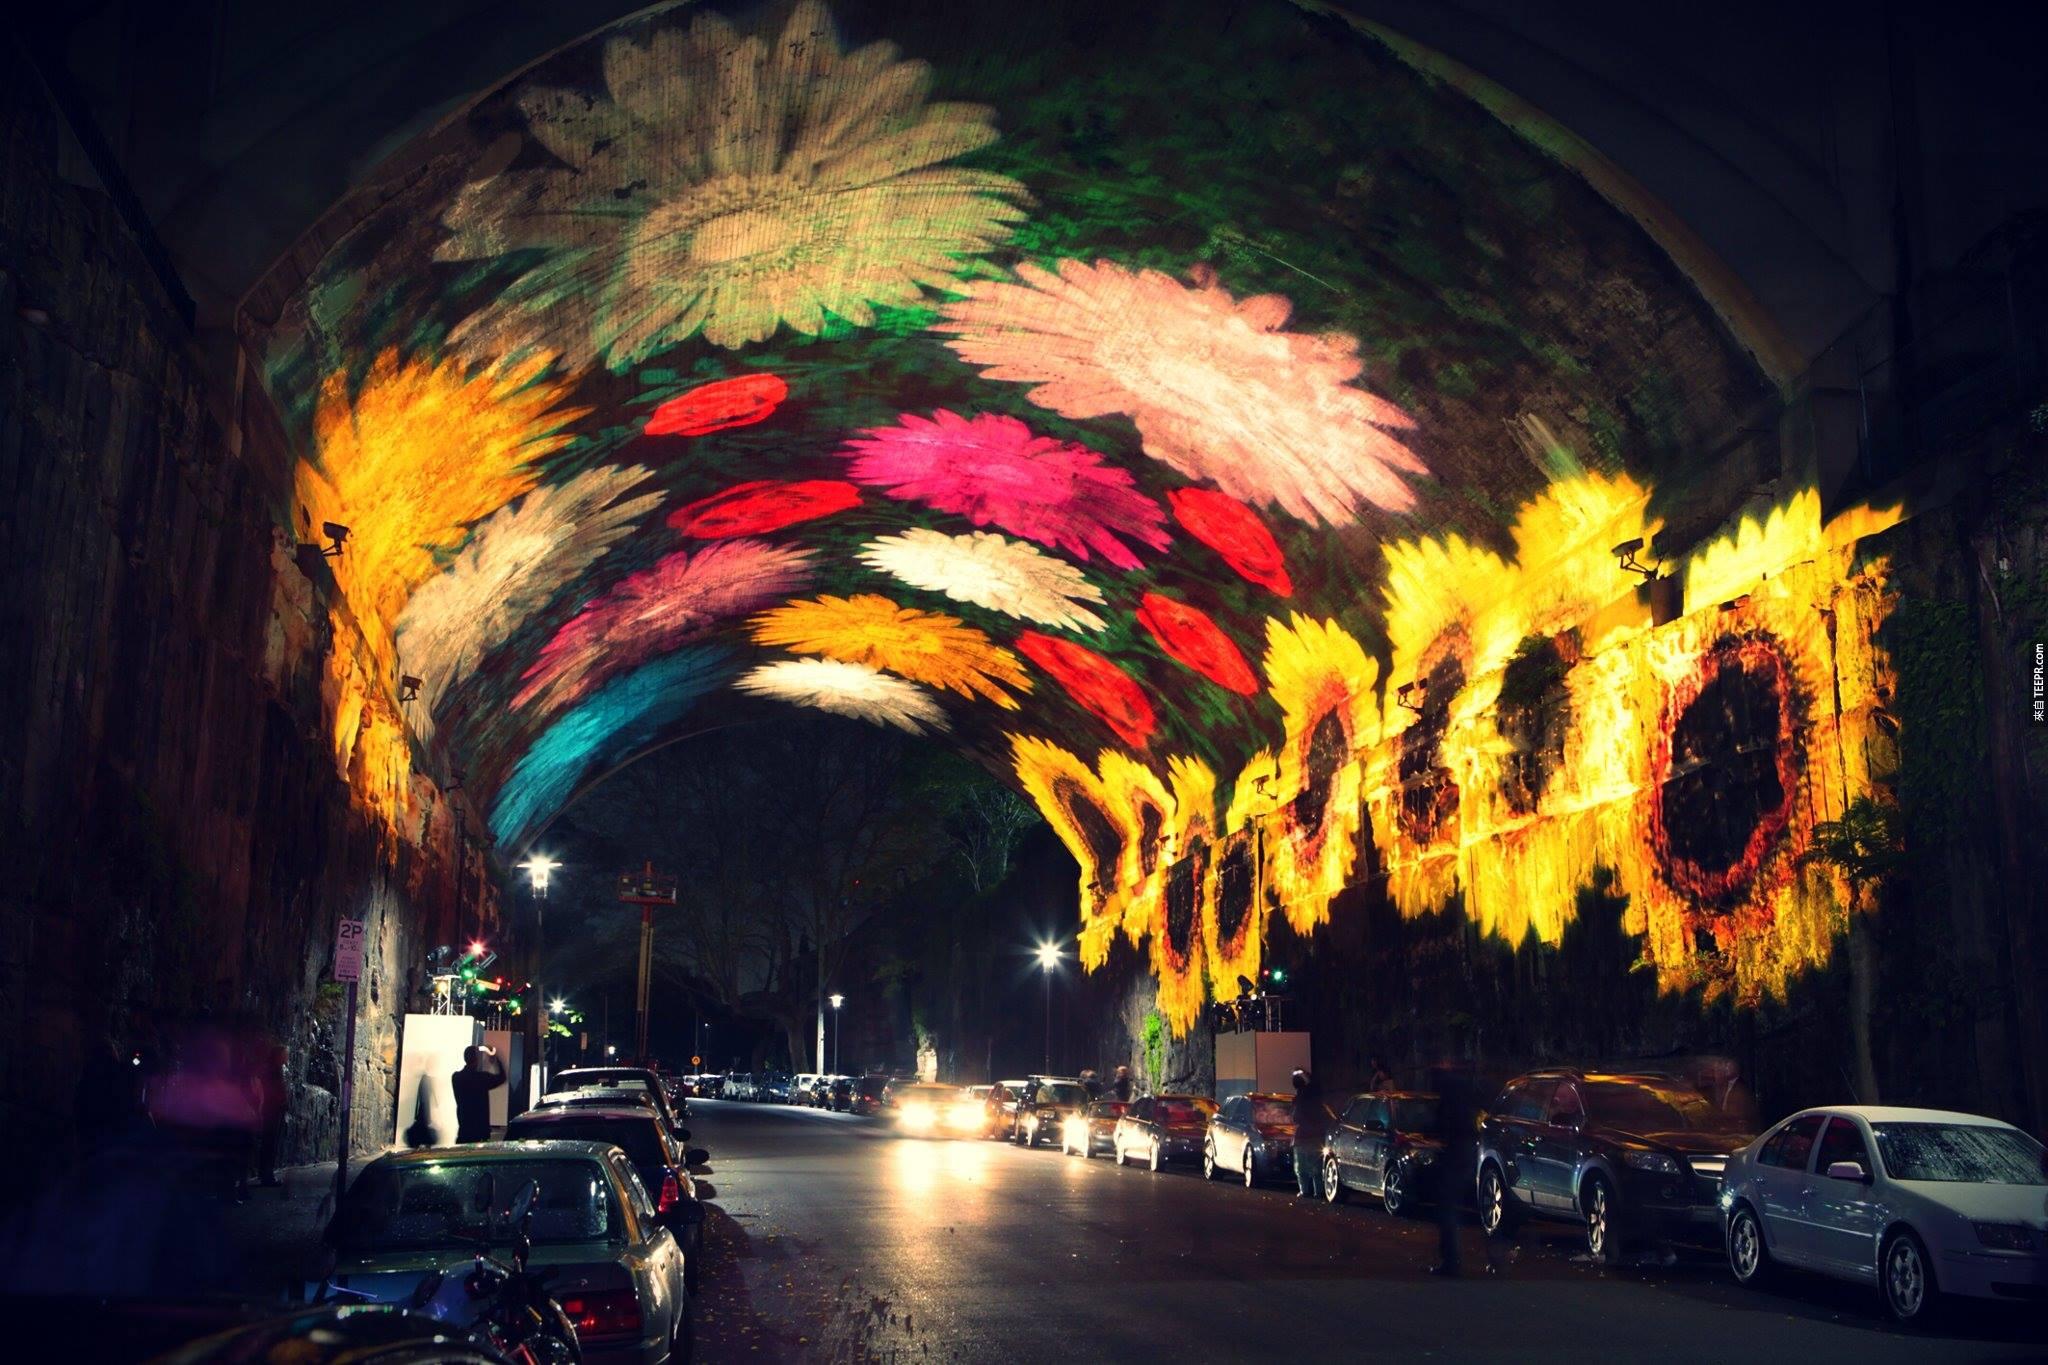 Downtown Sydney Transformed by Light for Vivid Sydney Sydney projection light exhibition 